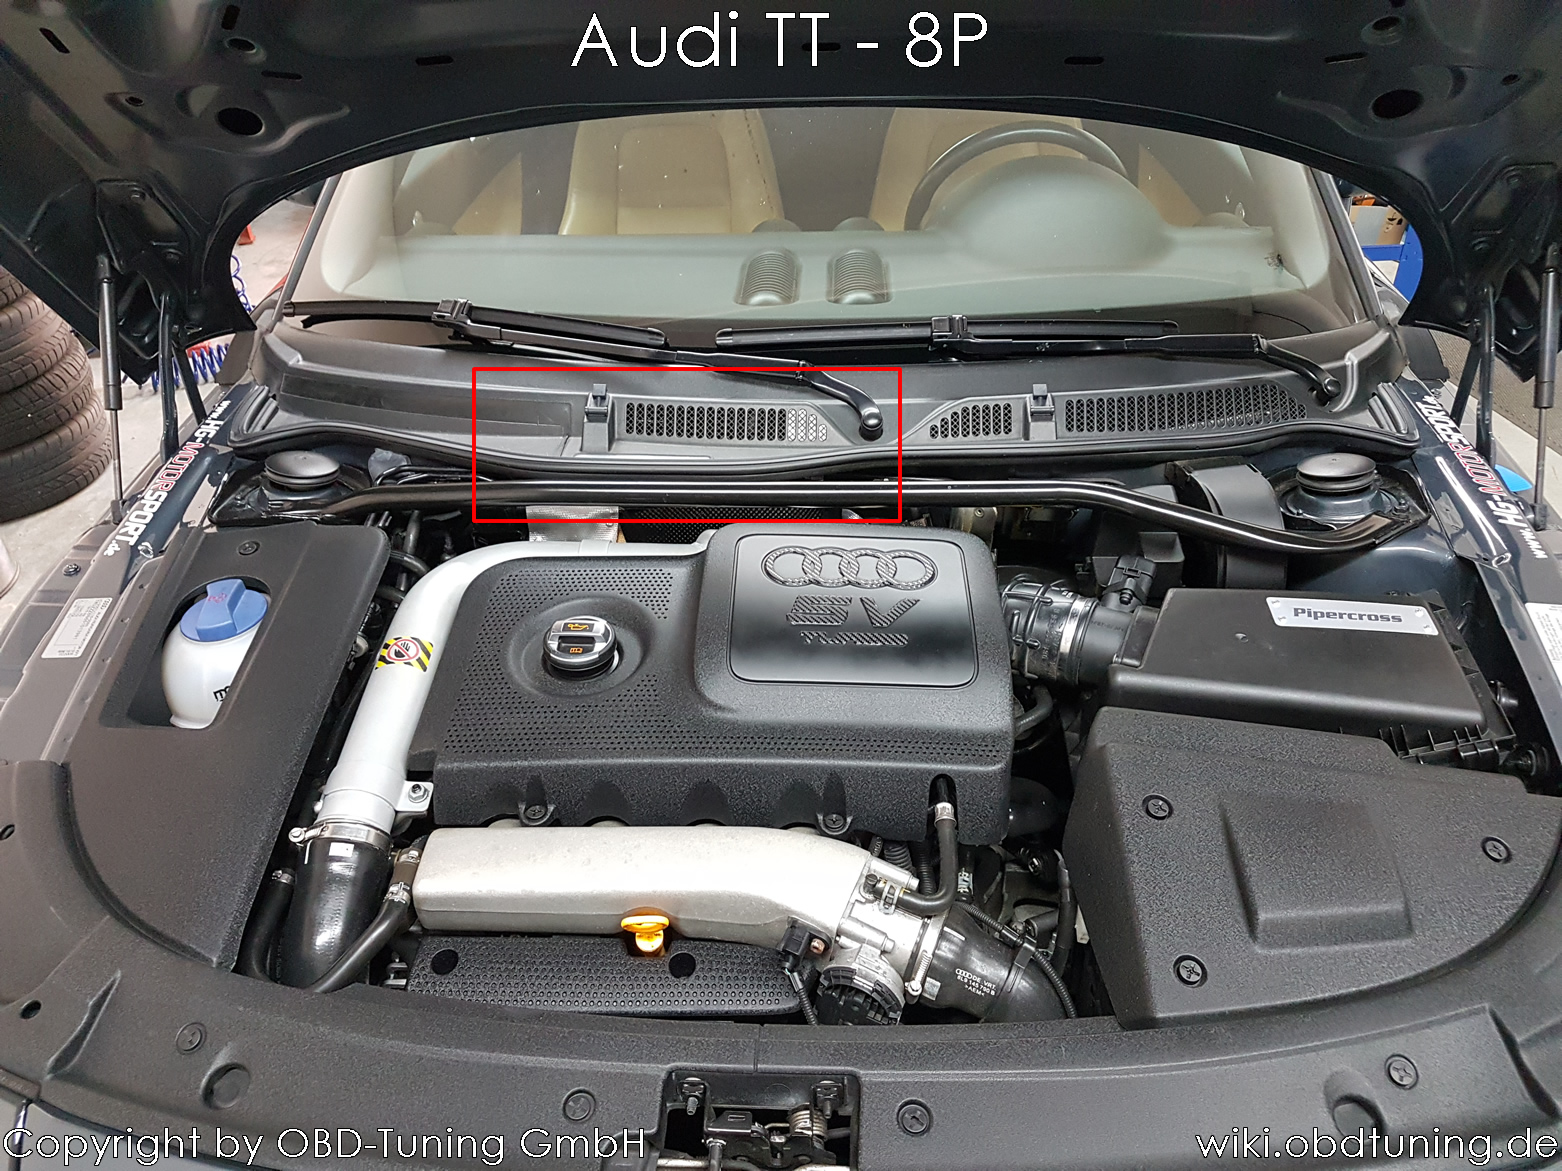 Audi TT 8P ECU.jpg